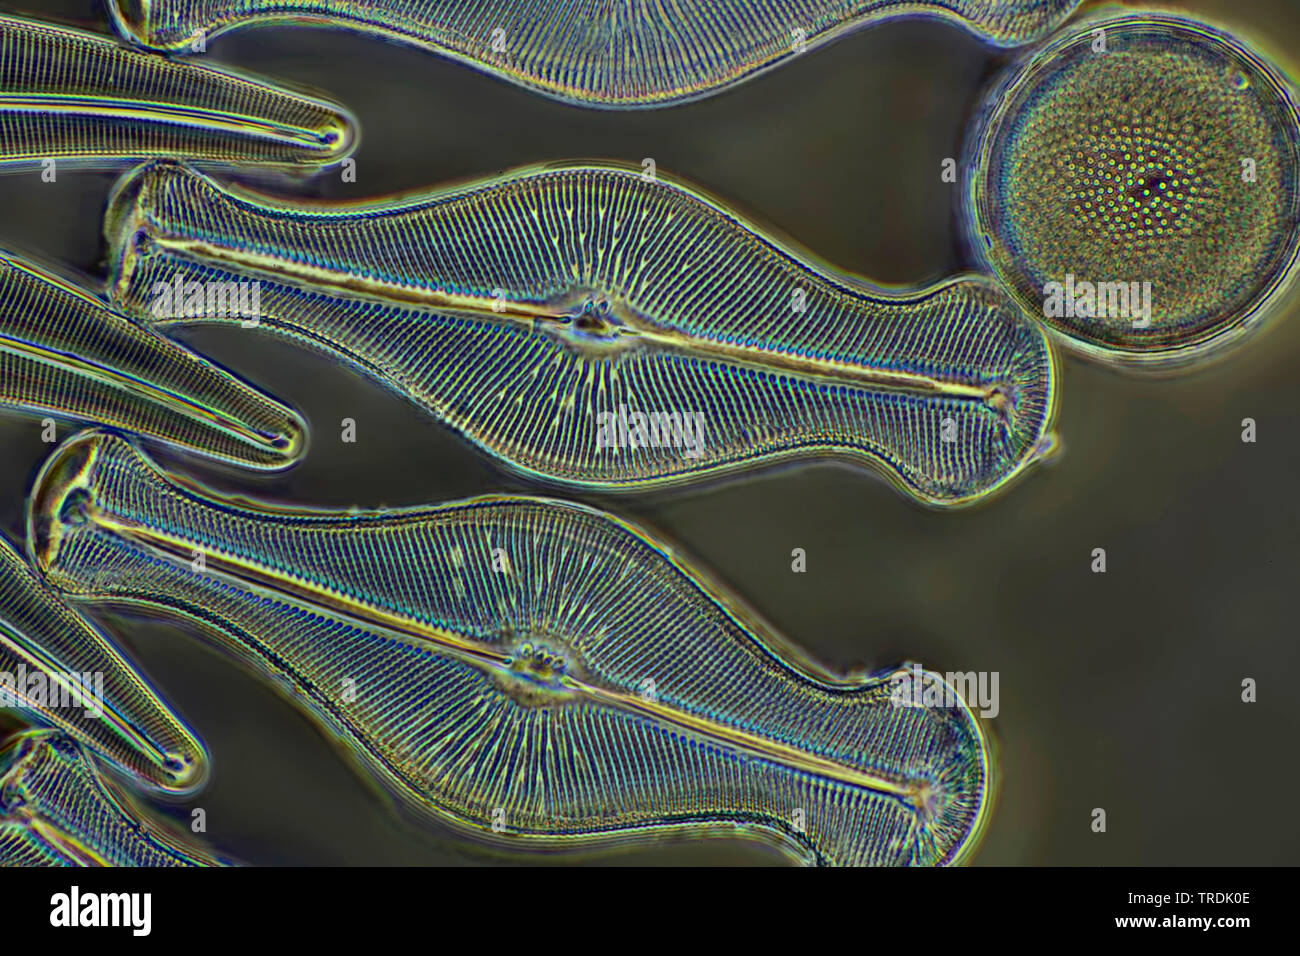 diatom (Diatomeae), dioatomeen in Phase contrast microscopy, x 160 Stock Photo